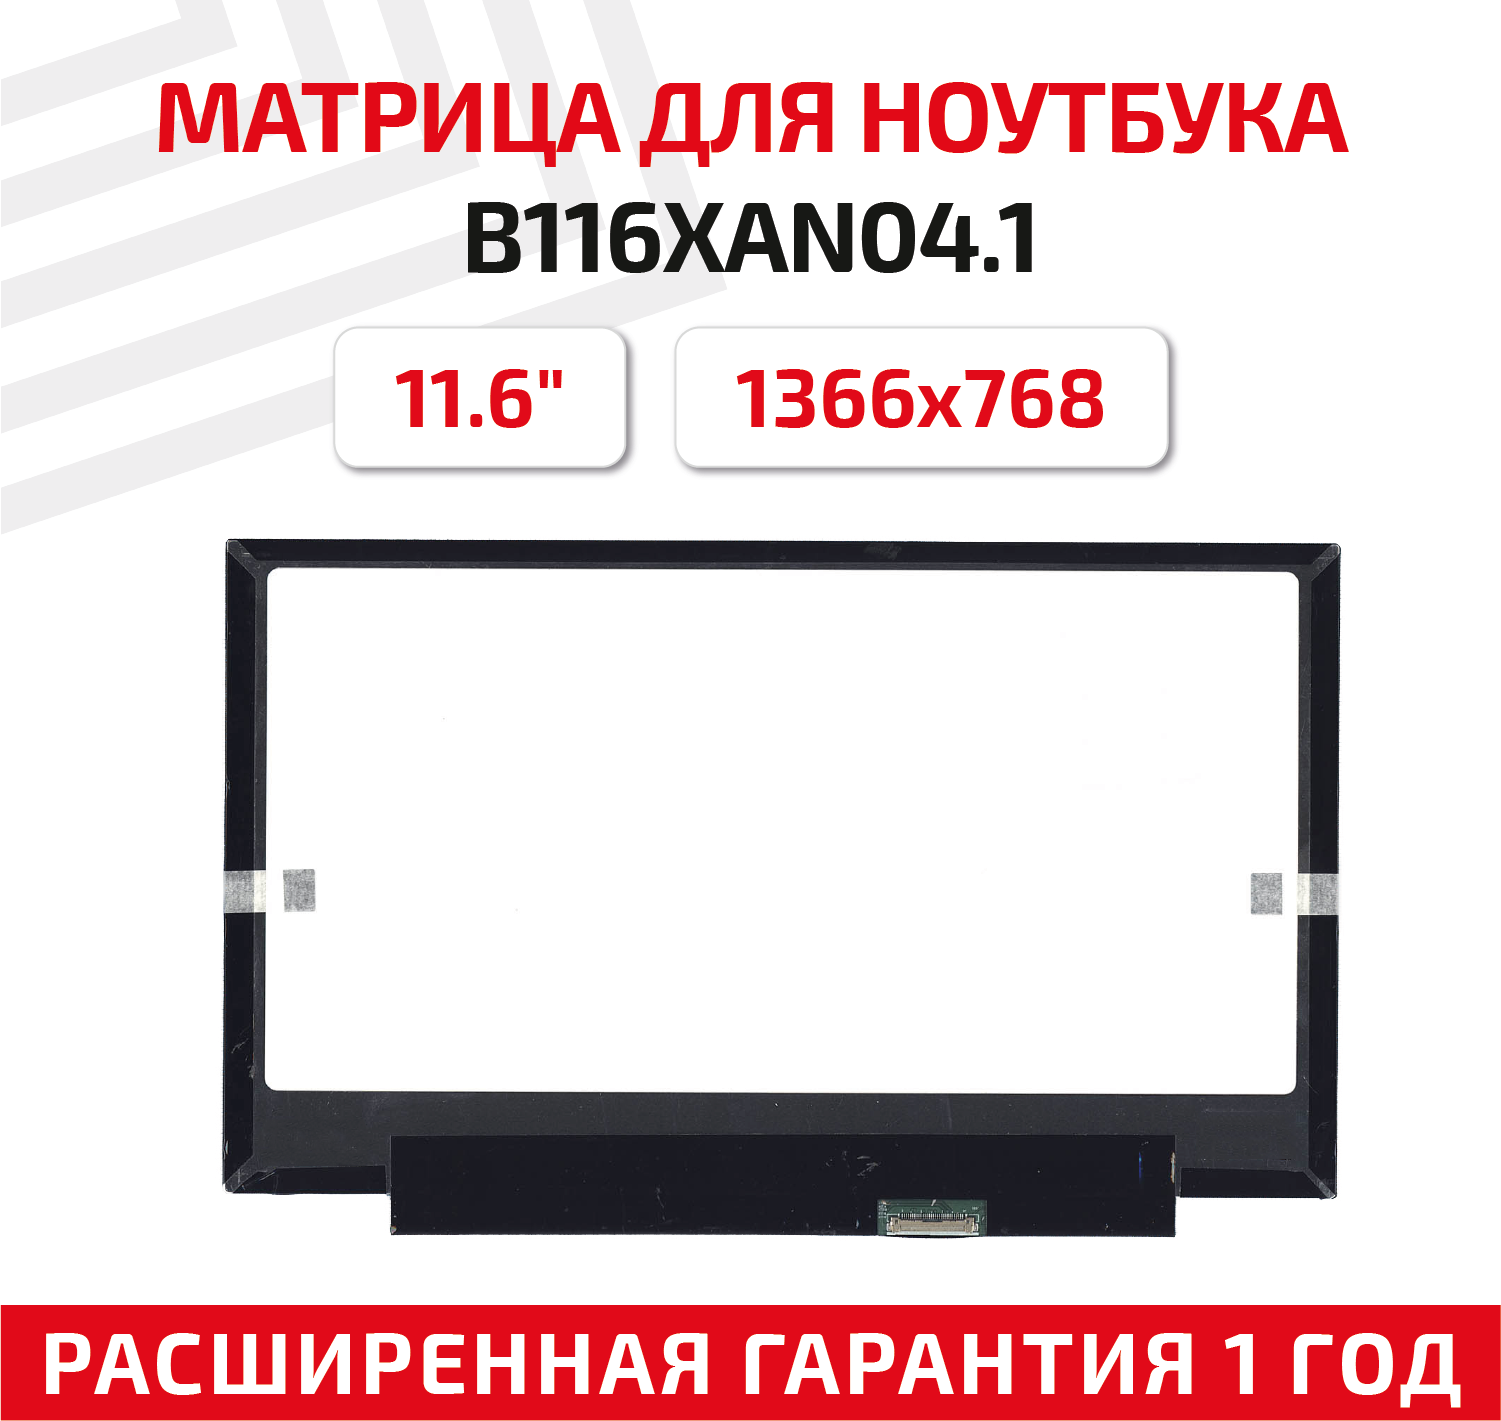 Матрица (экран) для ноутбука B116XAN04.1, 11.6", 1366x768, Slim (тонкая), 30-pin, светодиодная (LED), глянцевая